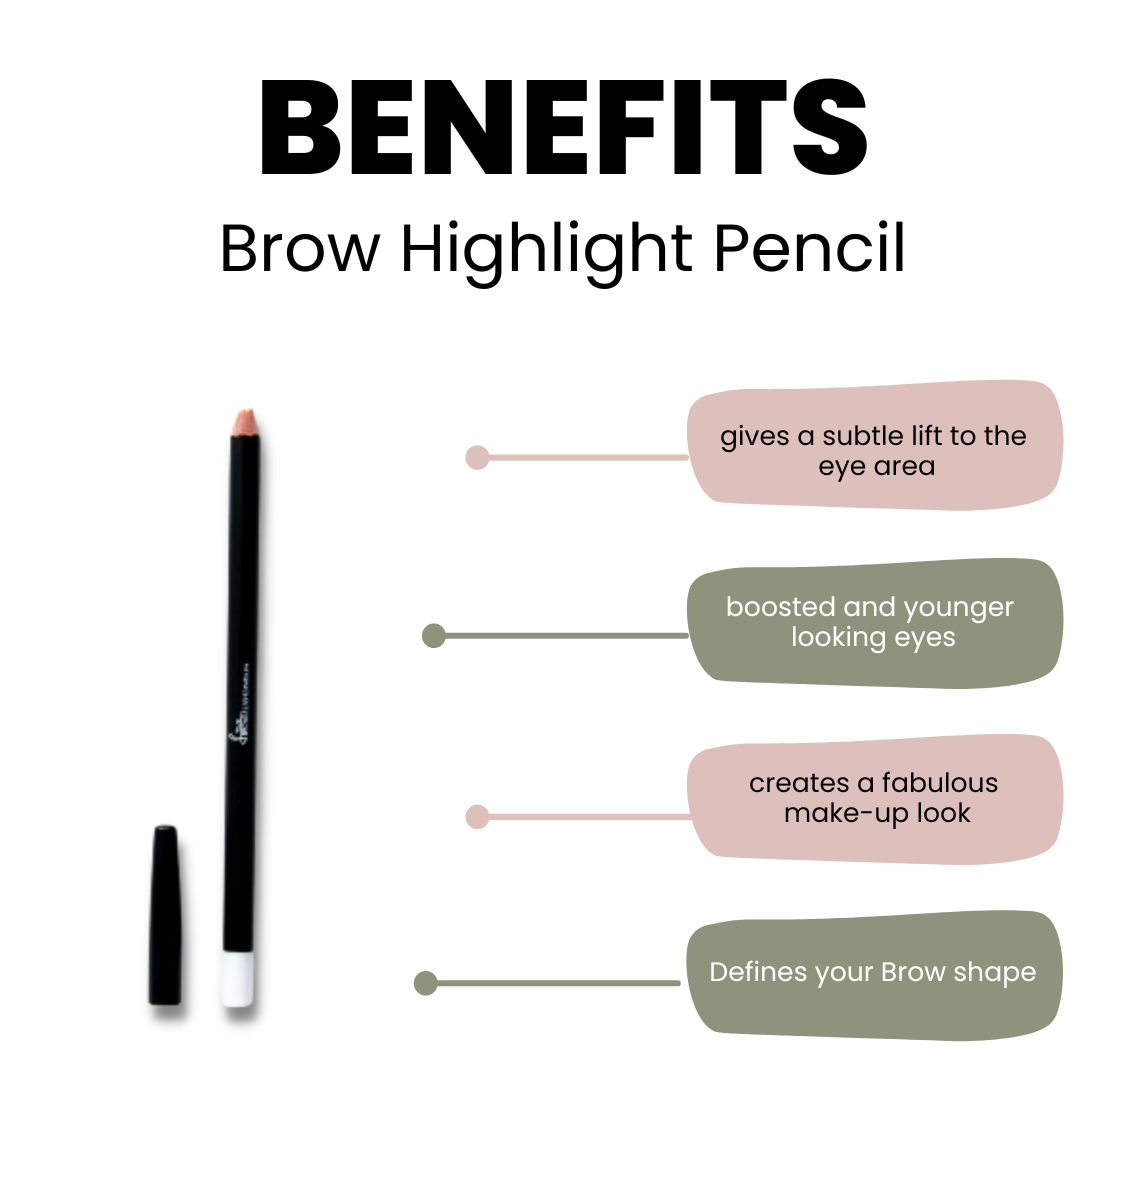 Brow Highlight Pencil